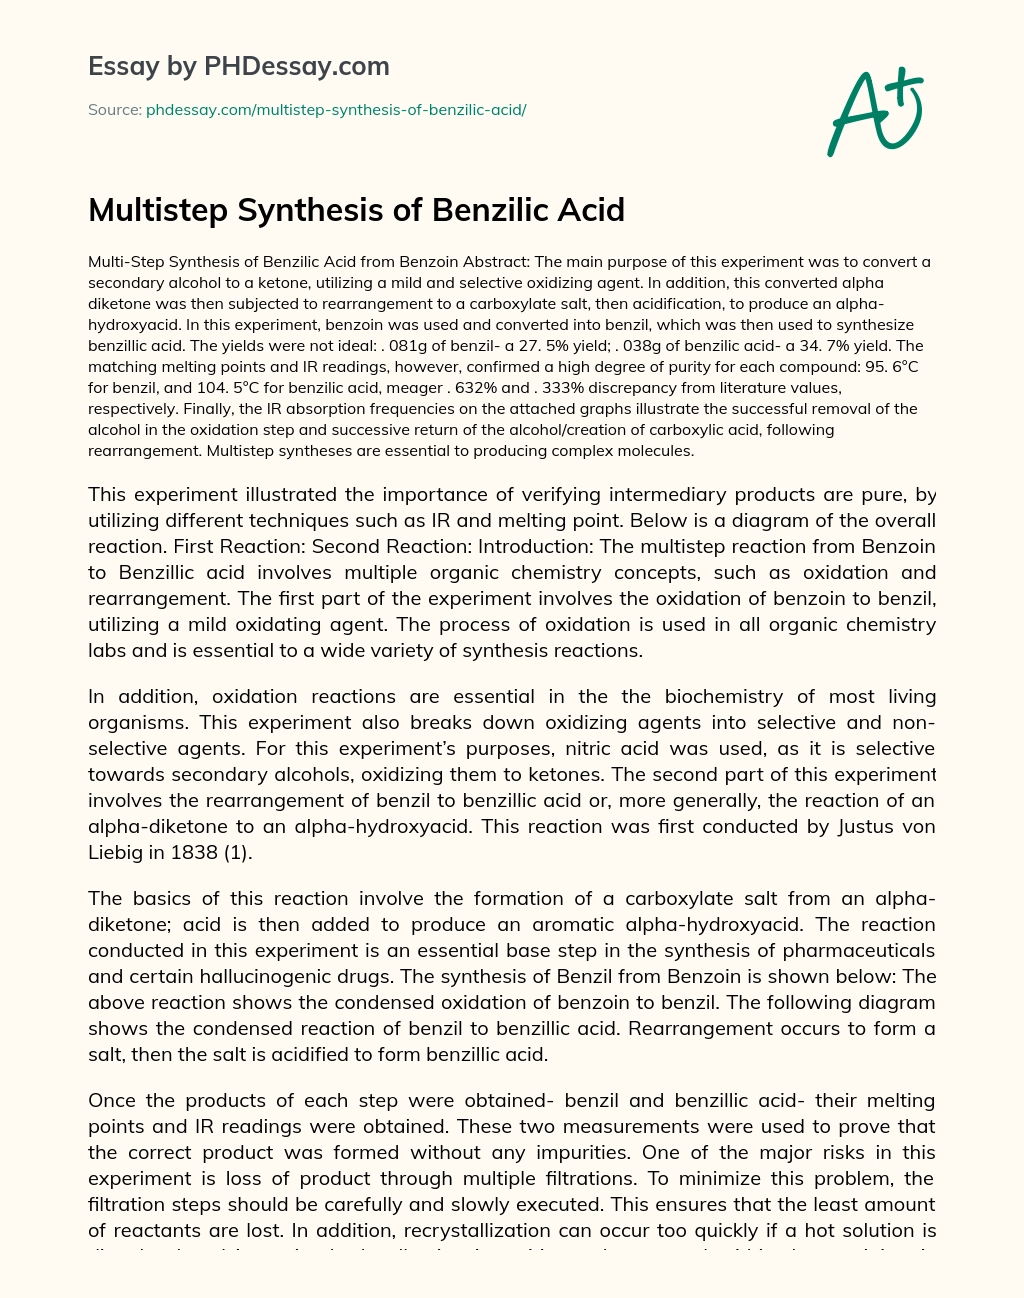 Multistep Synthesis of Benzilic Acid essay